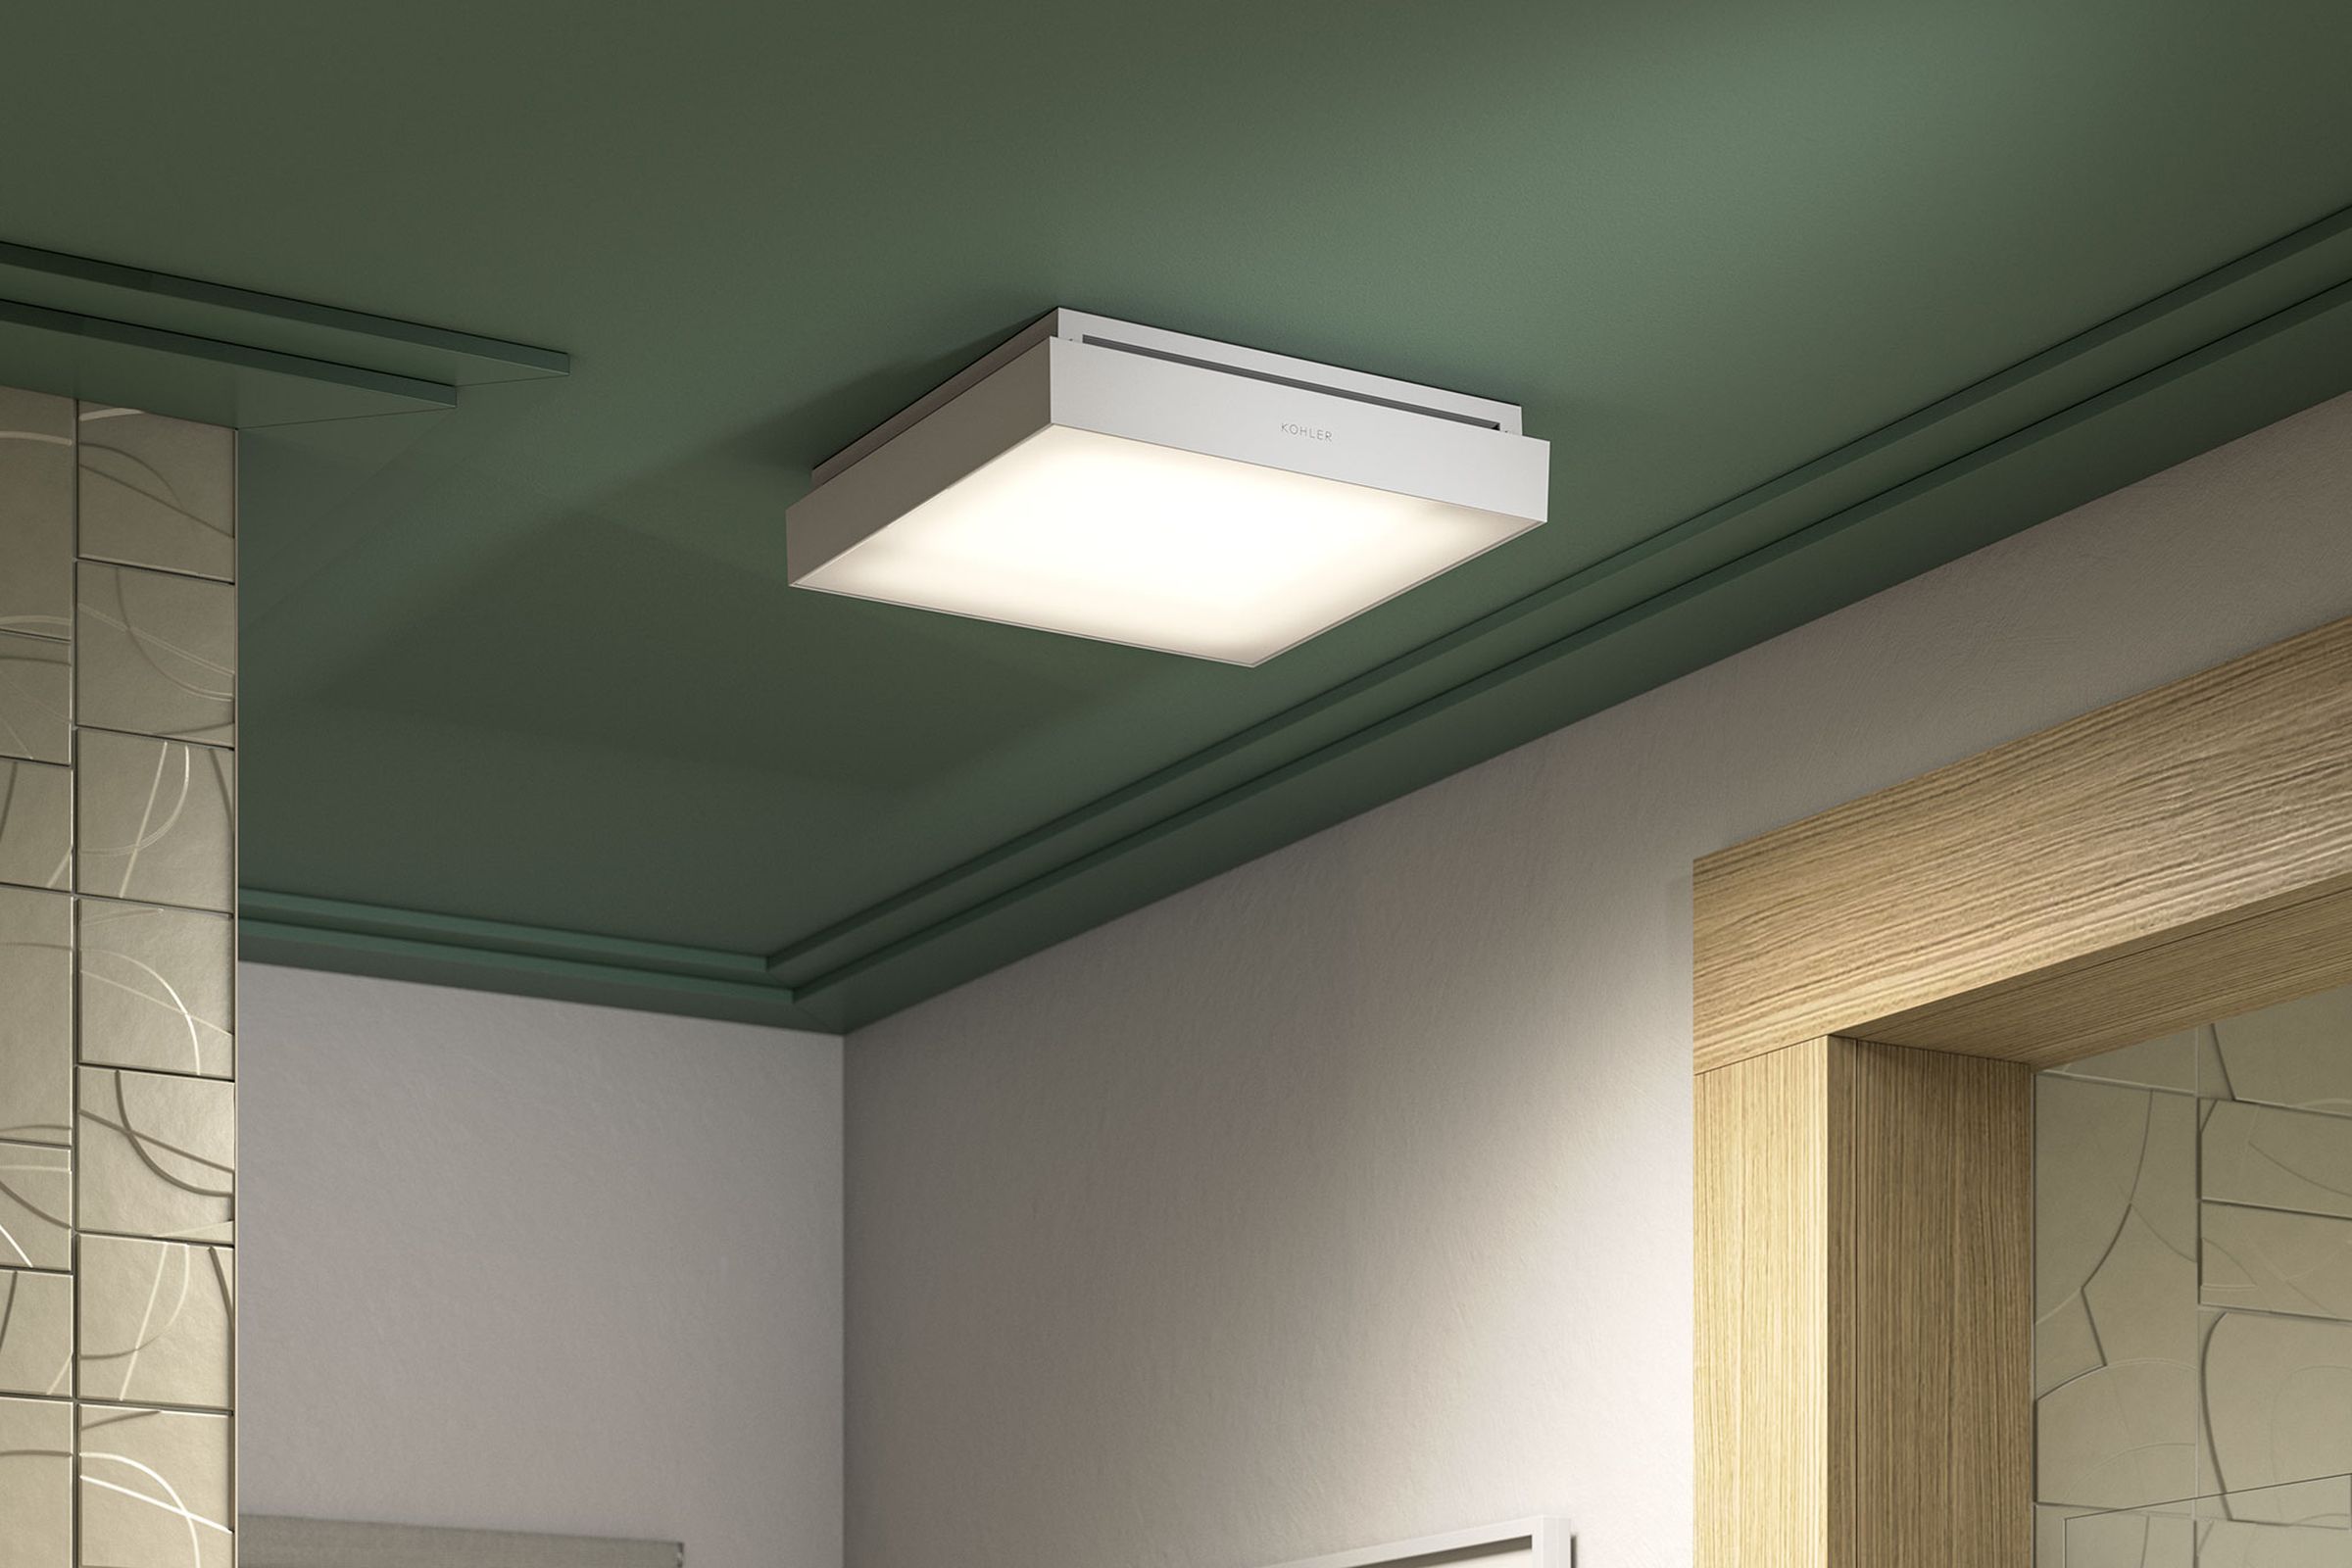 Close-up of Kohler Atmo smart bathroom fan on a green ceiling.